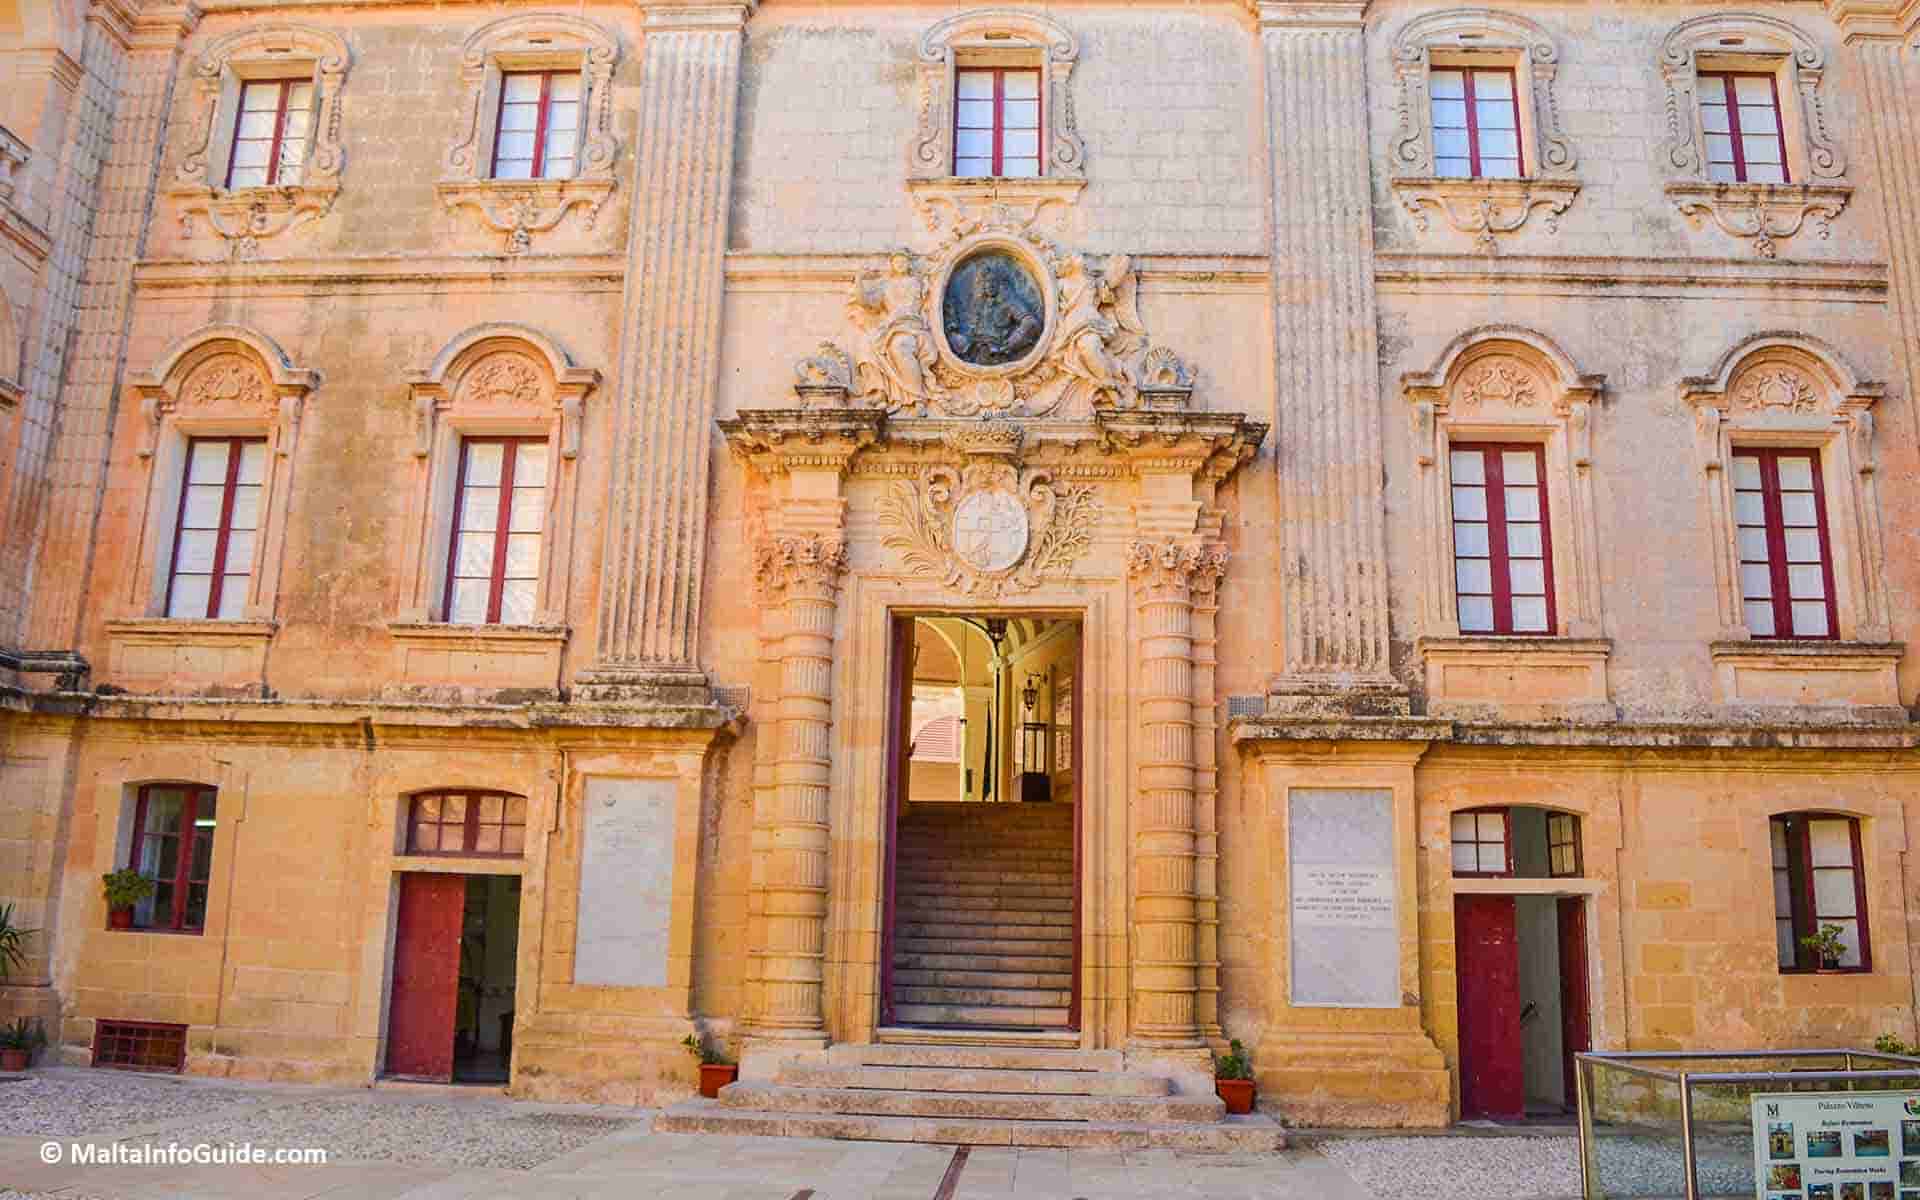 The facade of Palazzo Vilhena